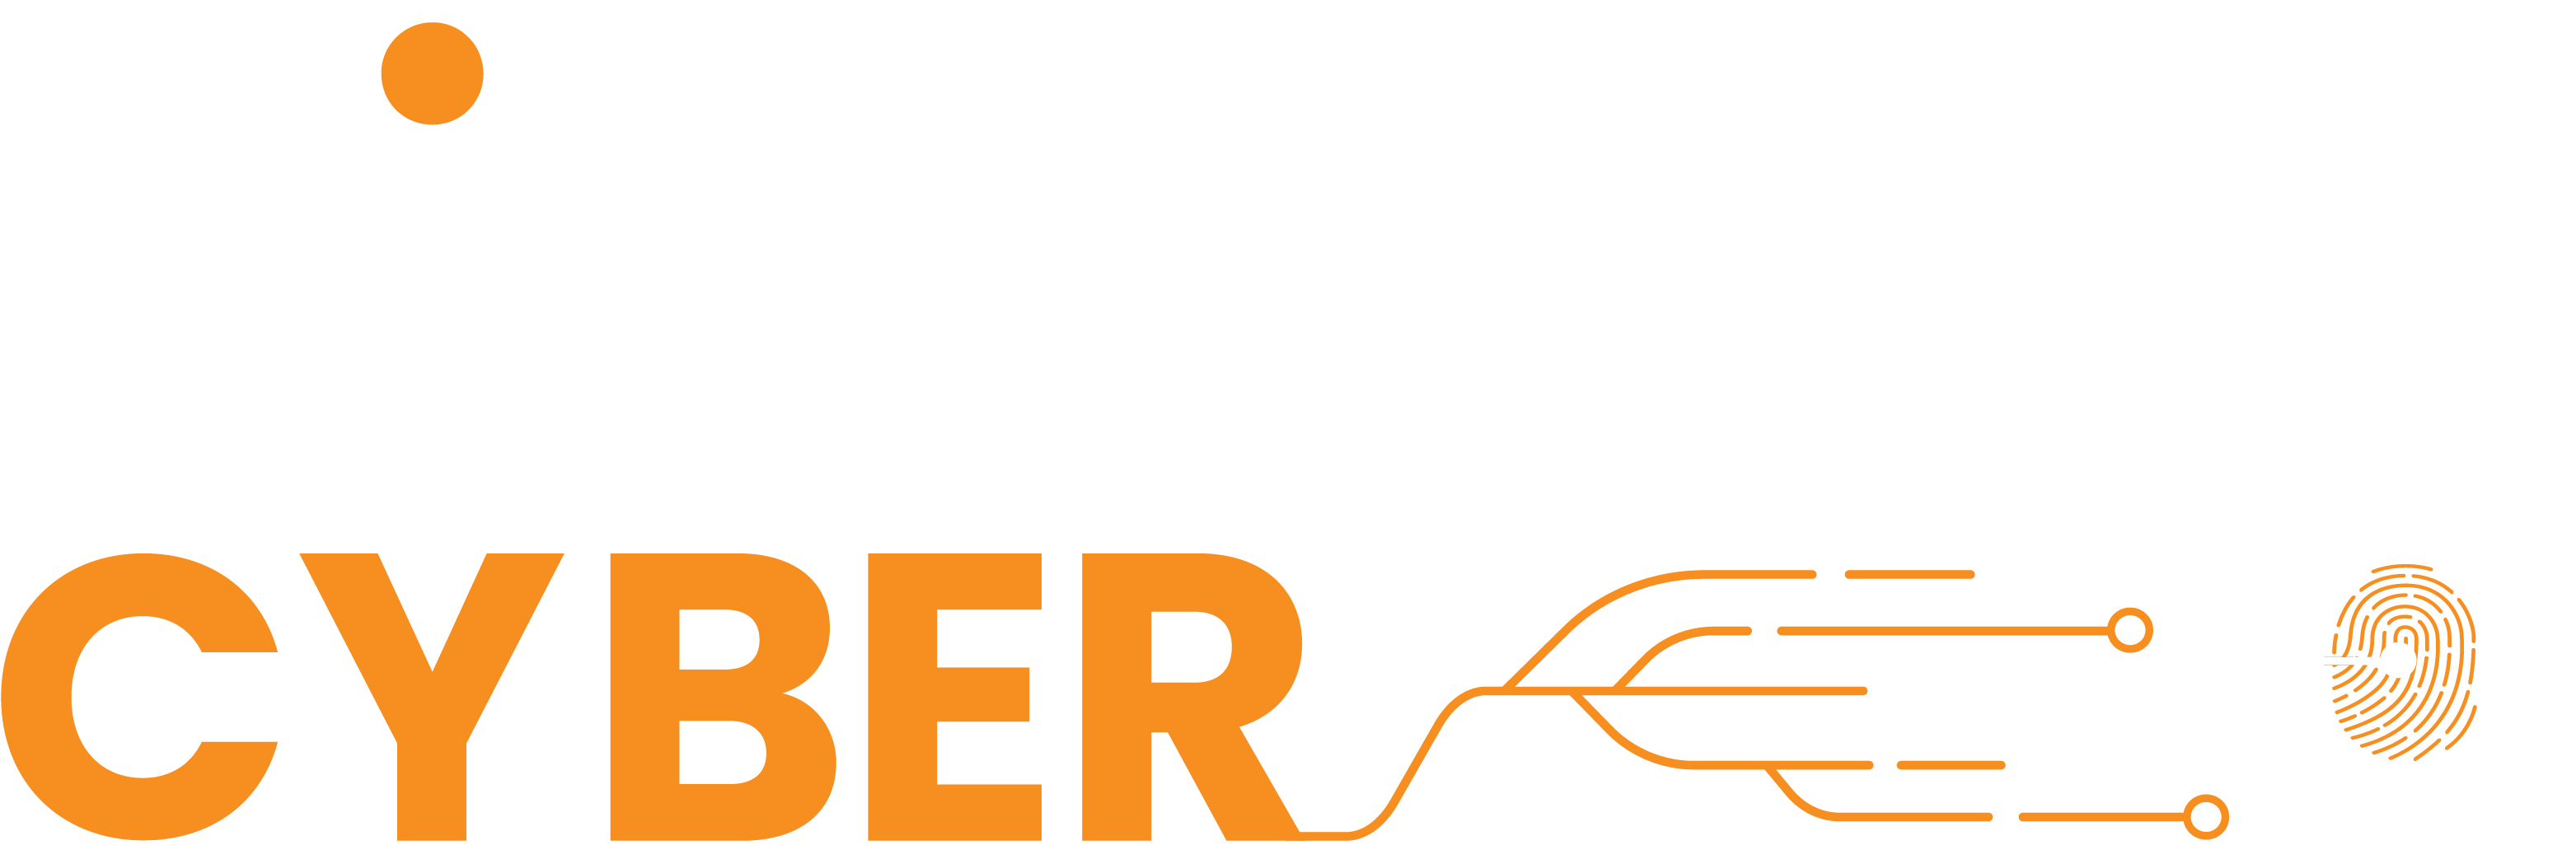 StickmanCyber Logo